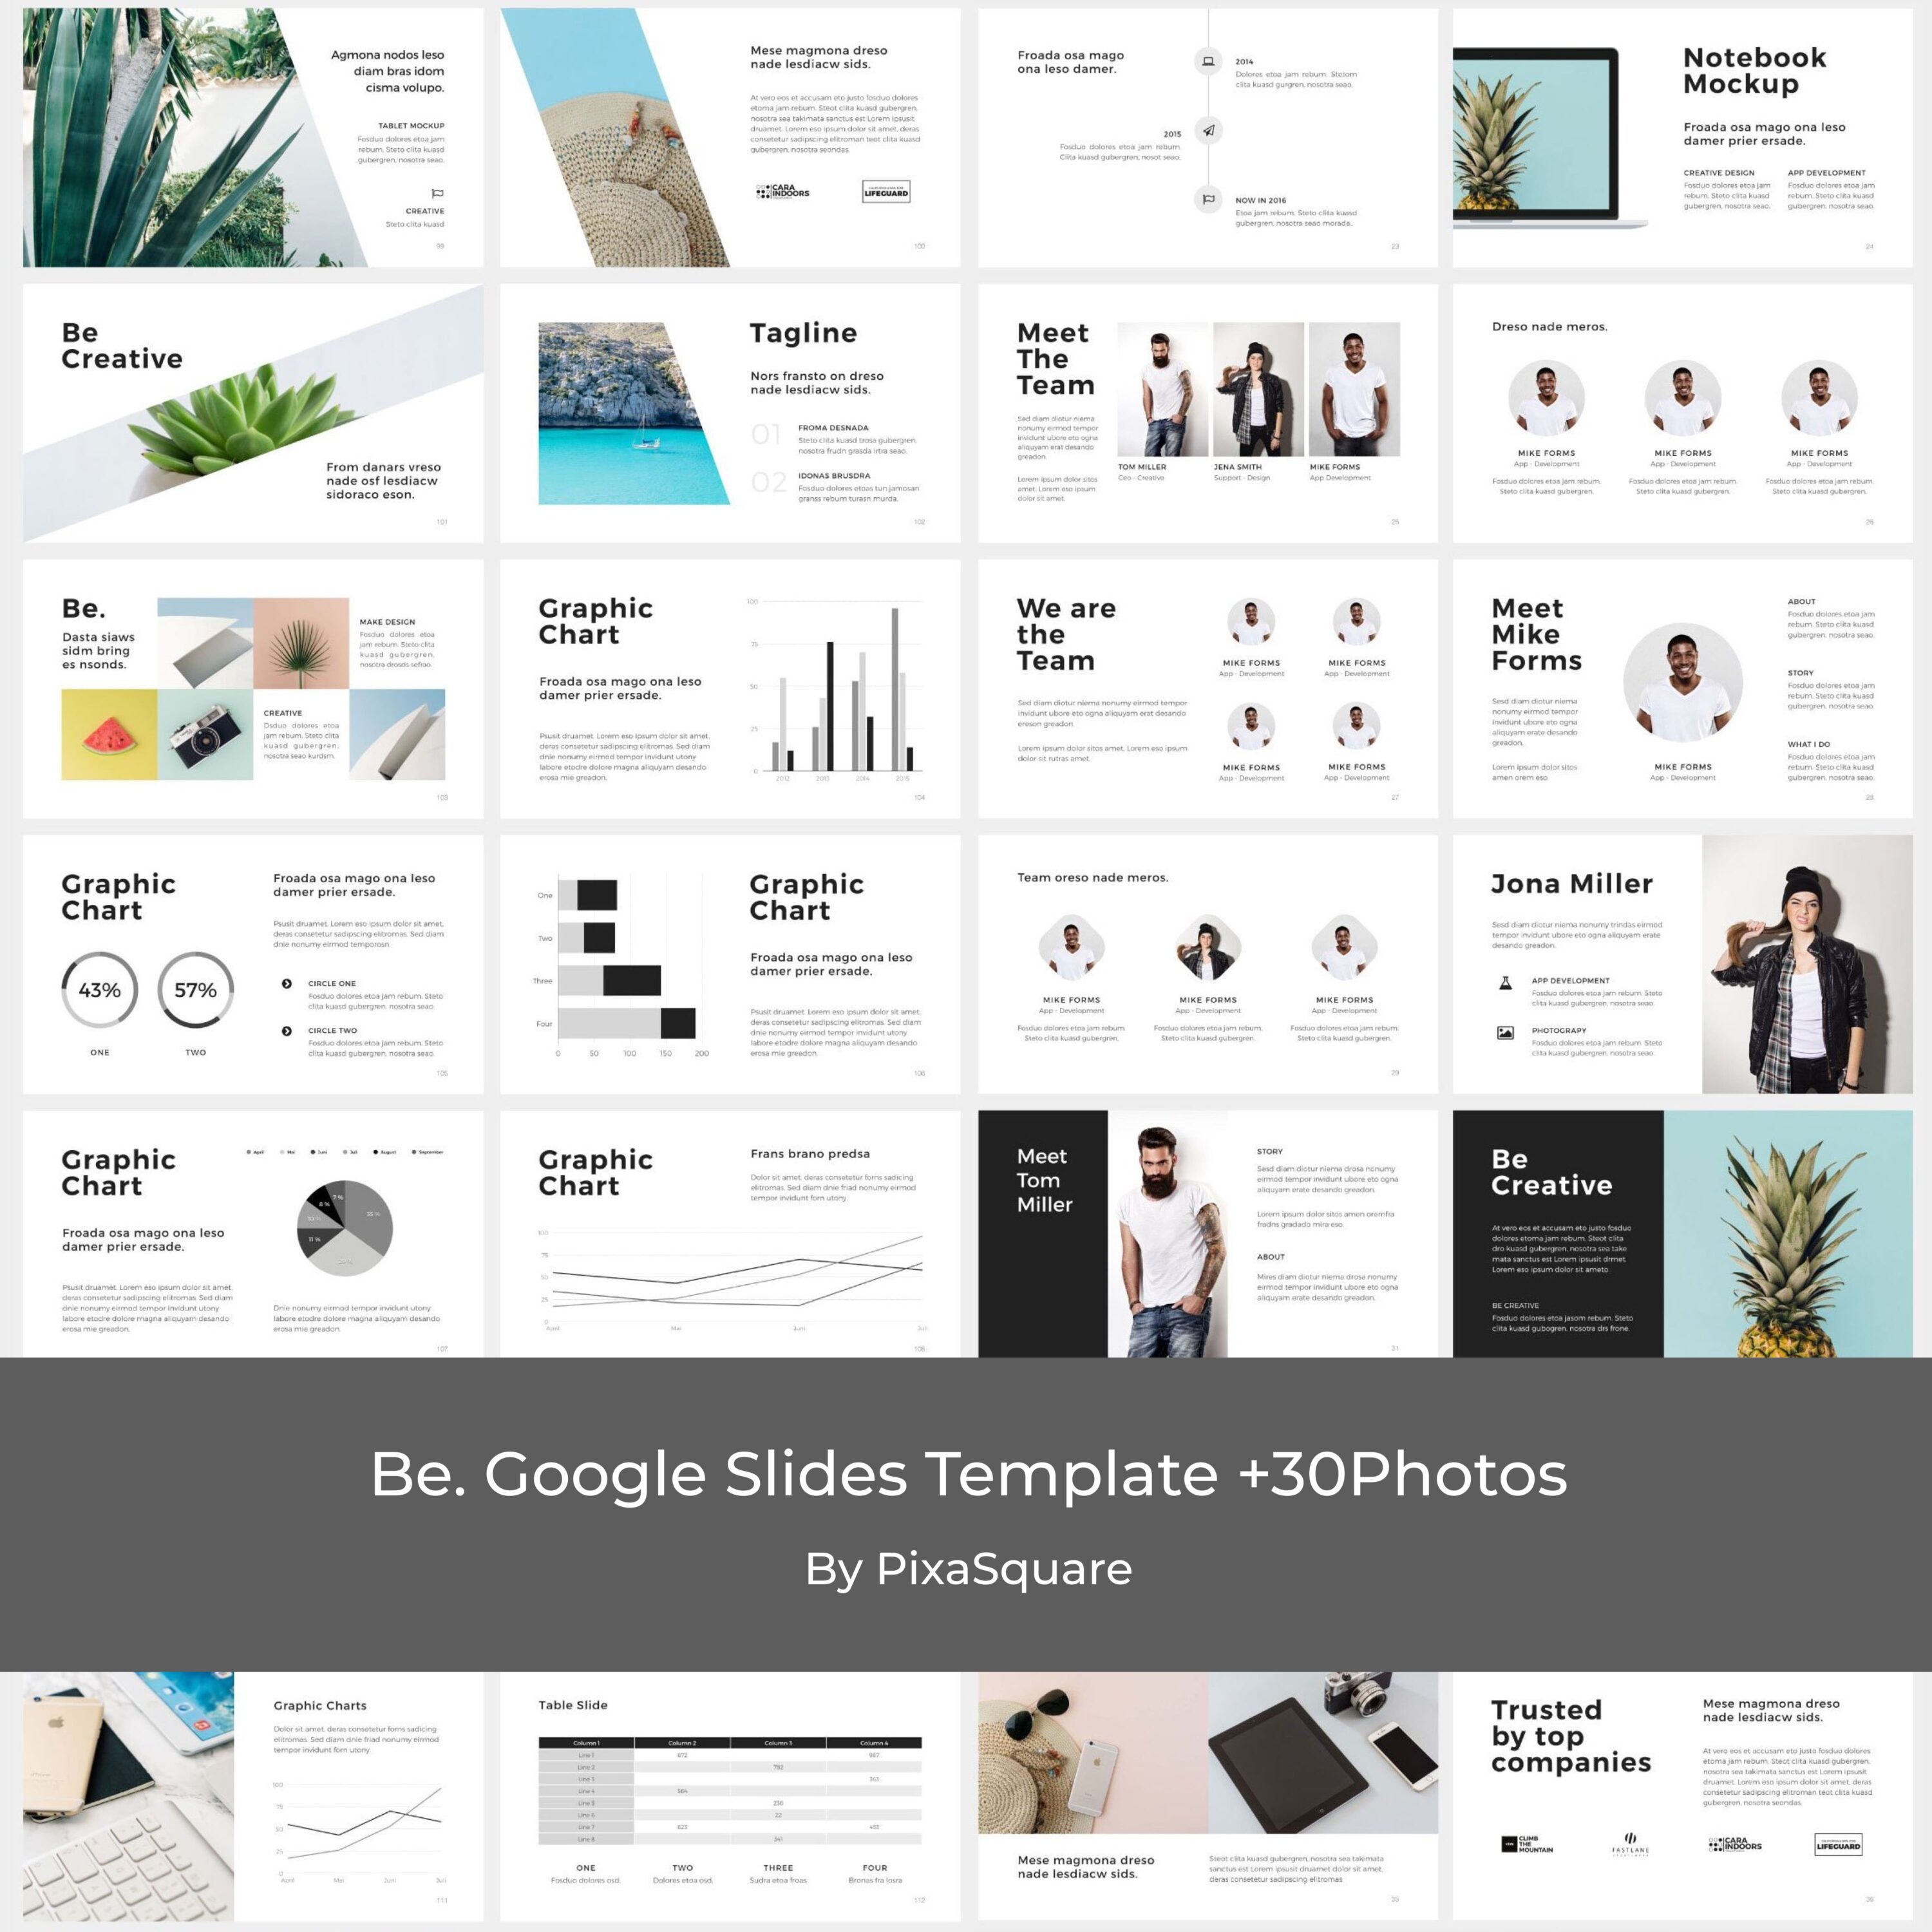 Be. Google Slides Template +30Photos.